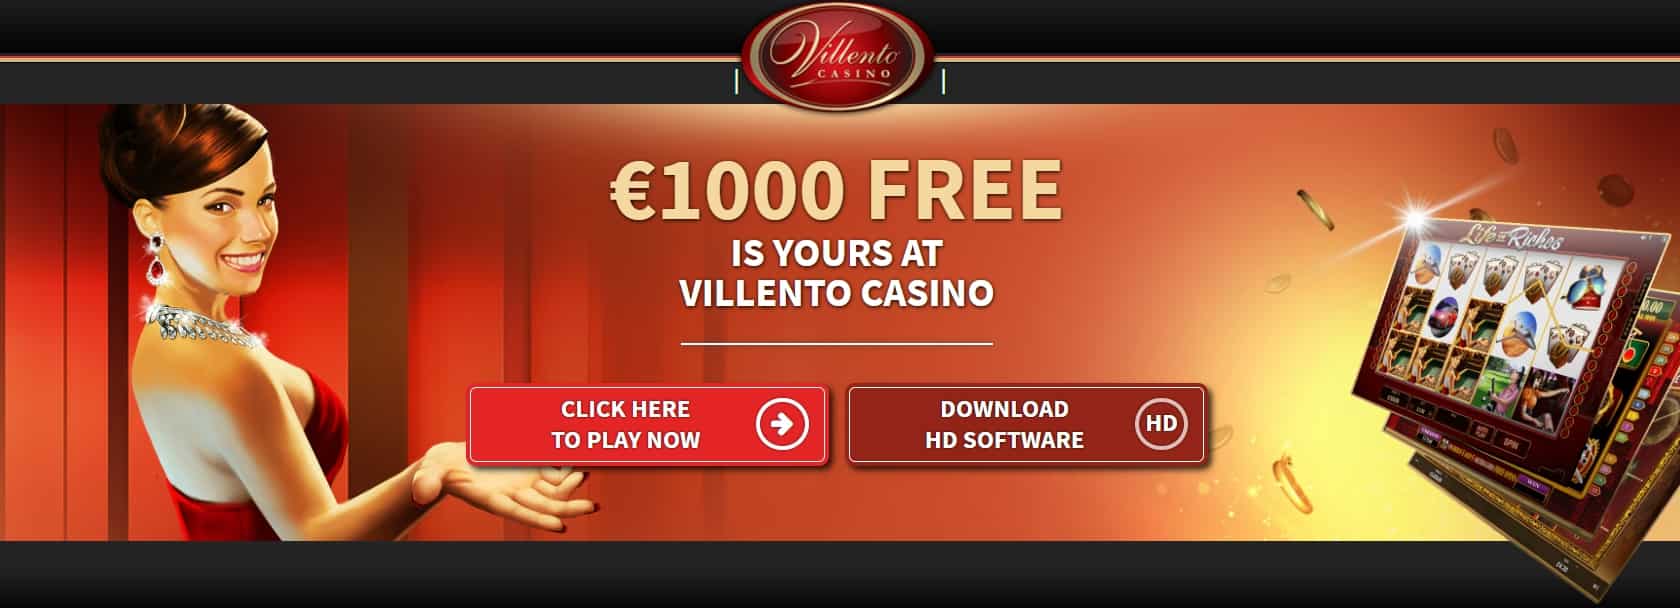 vilento casino online